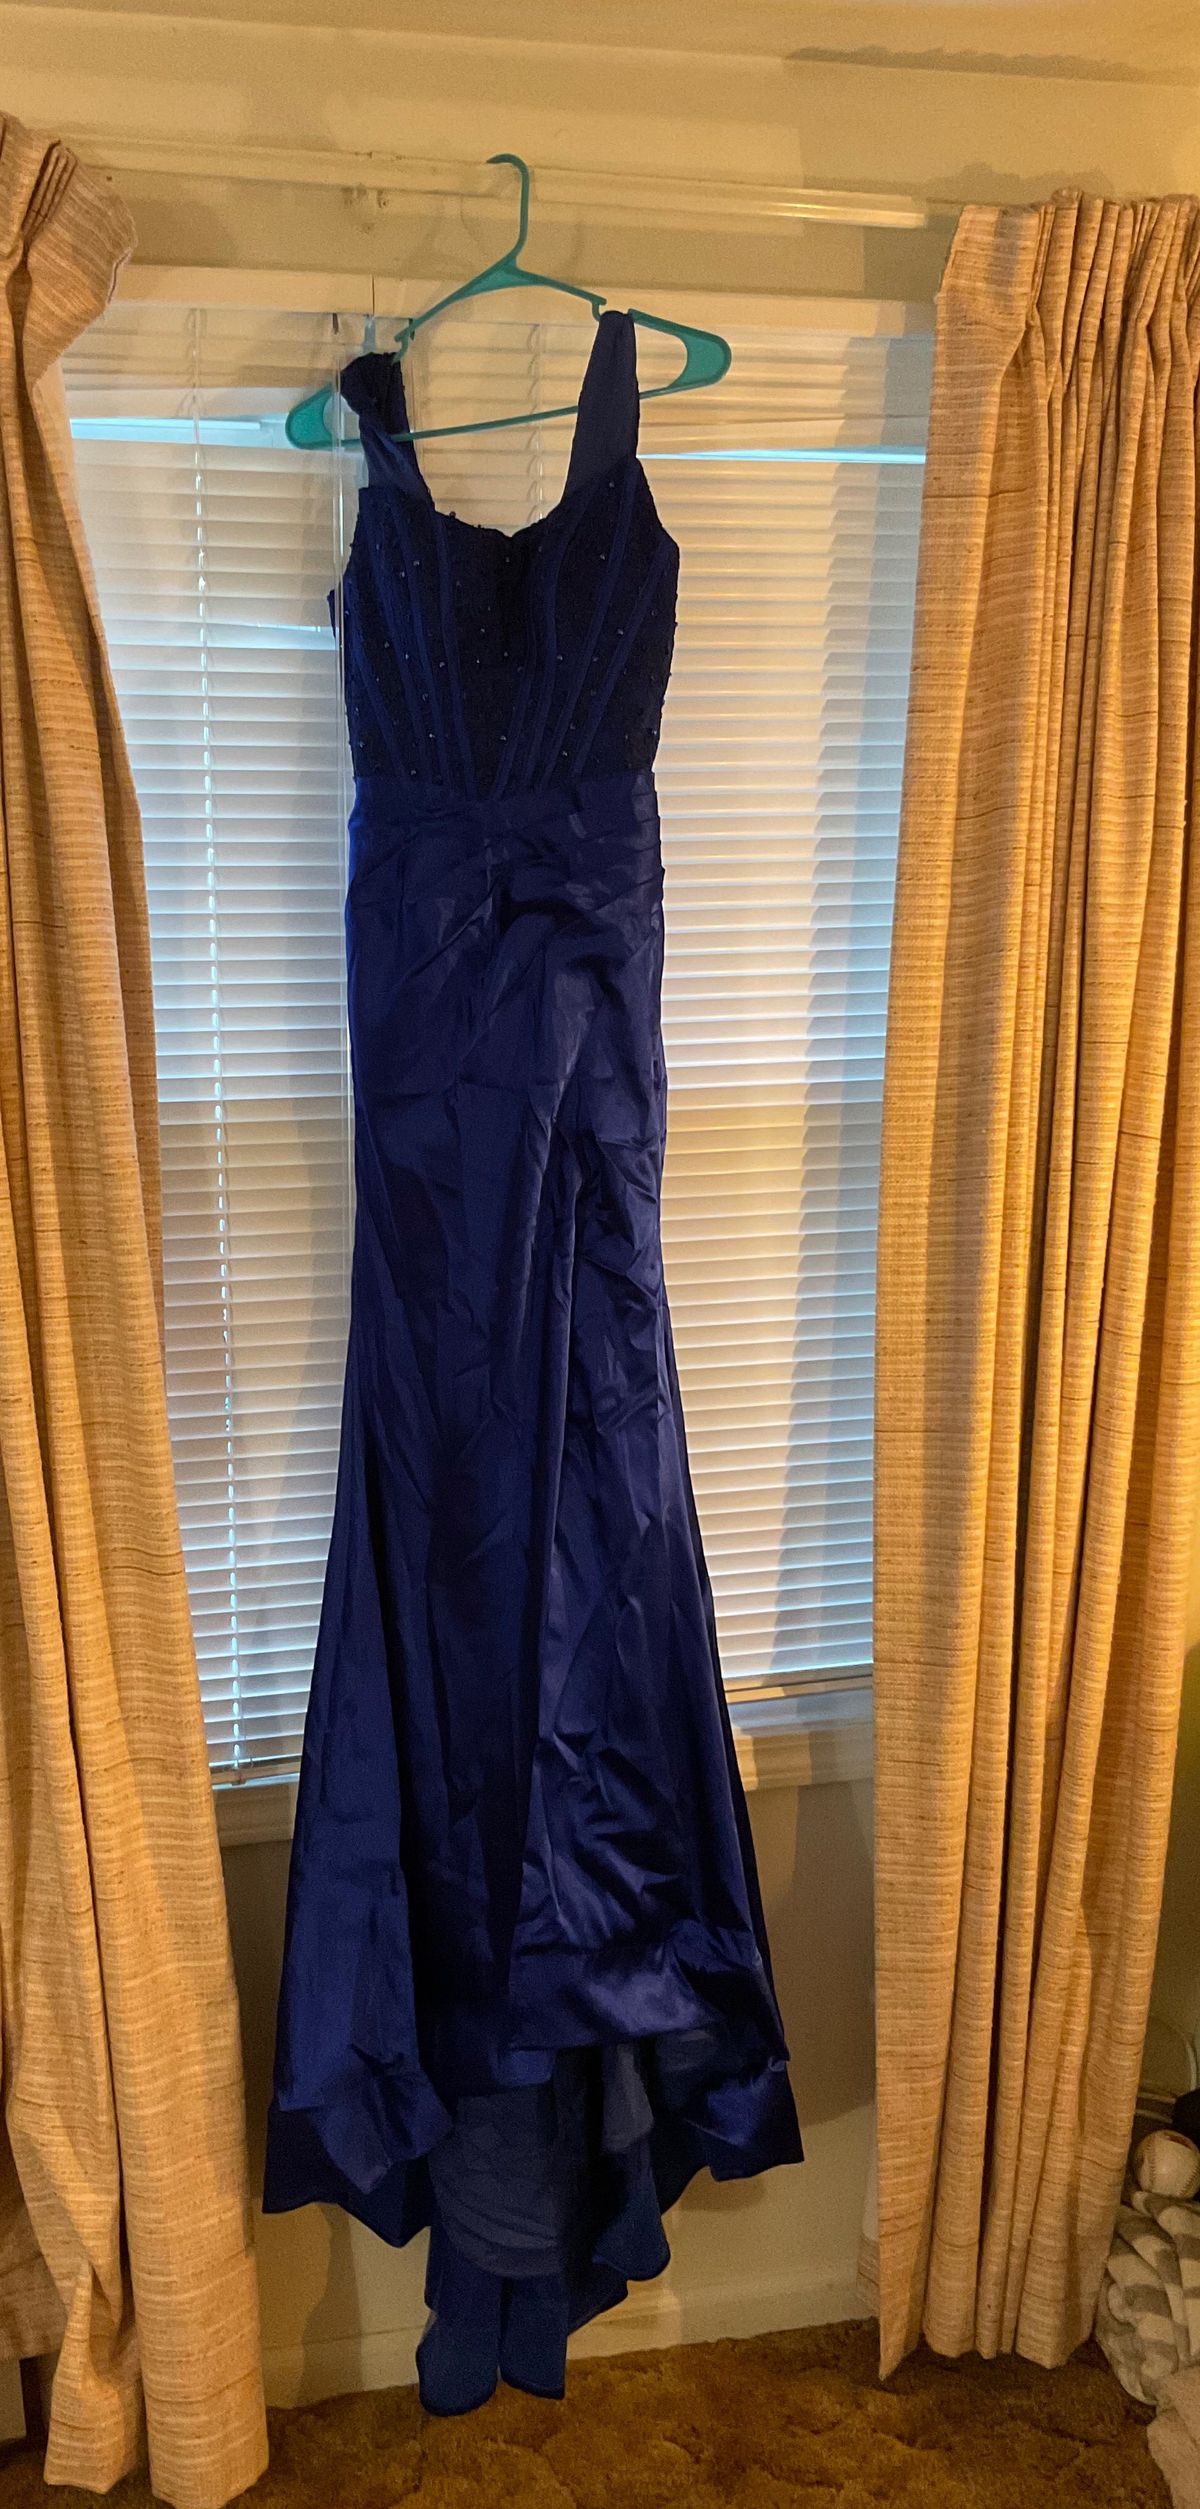 Size 2 Prom Off The Shoulder Sequined Royal Blue Side Slit Dress on Queenly